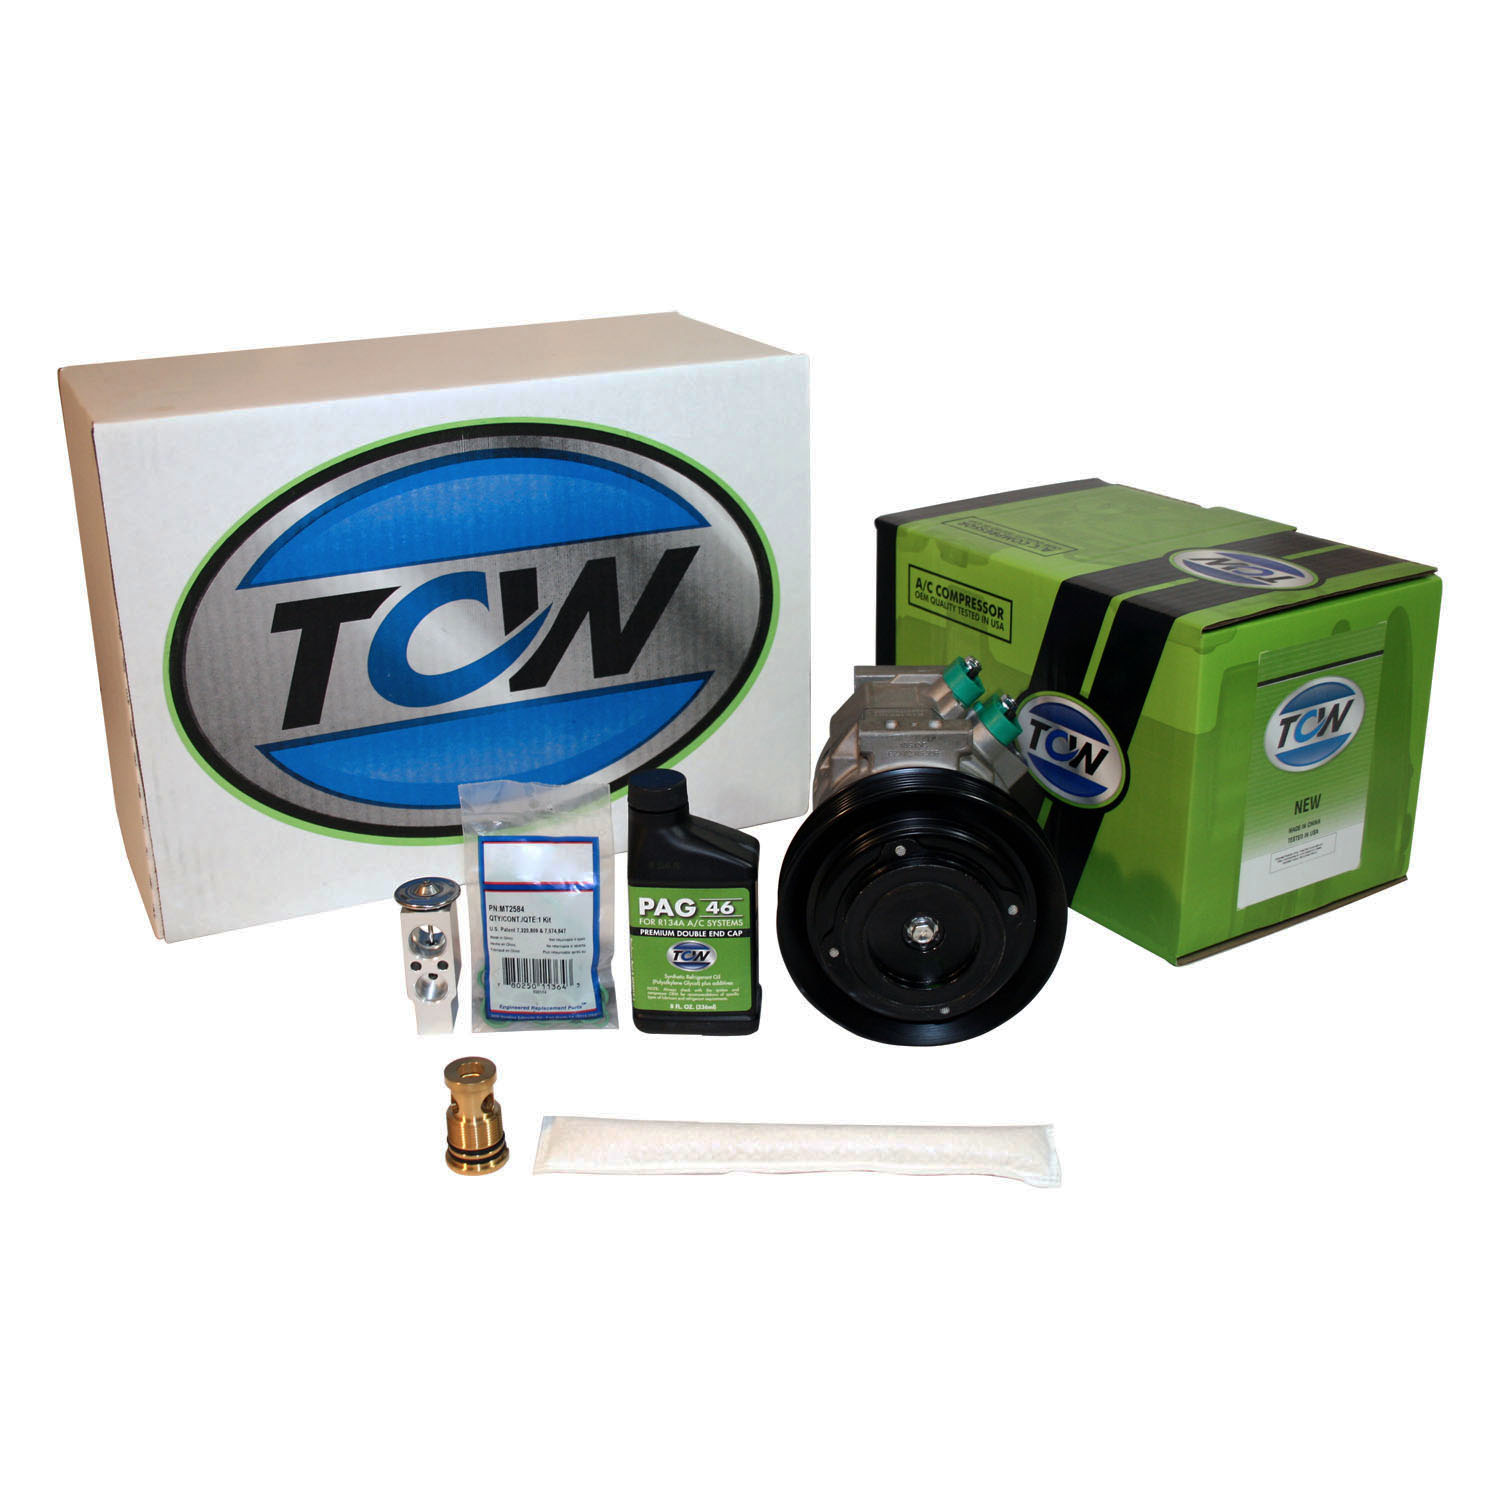 TCW Vehicle A/C Kit K1000269N New Product Image field_60b6a13a6e67c